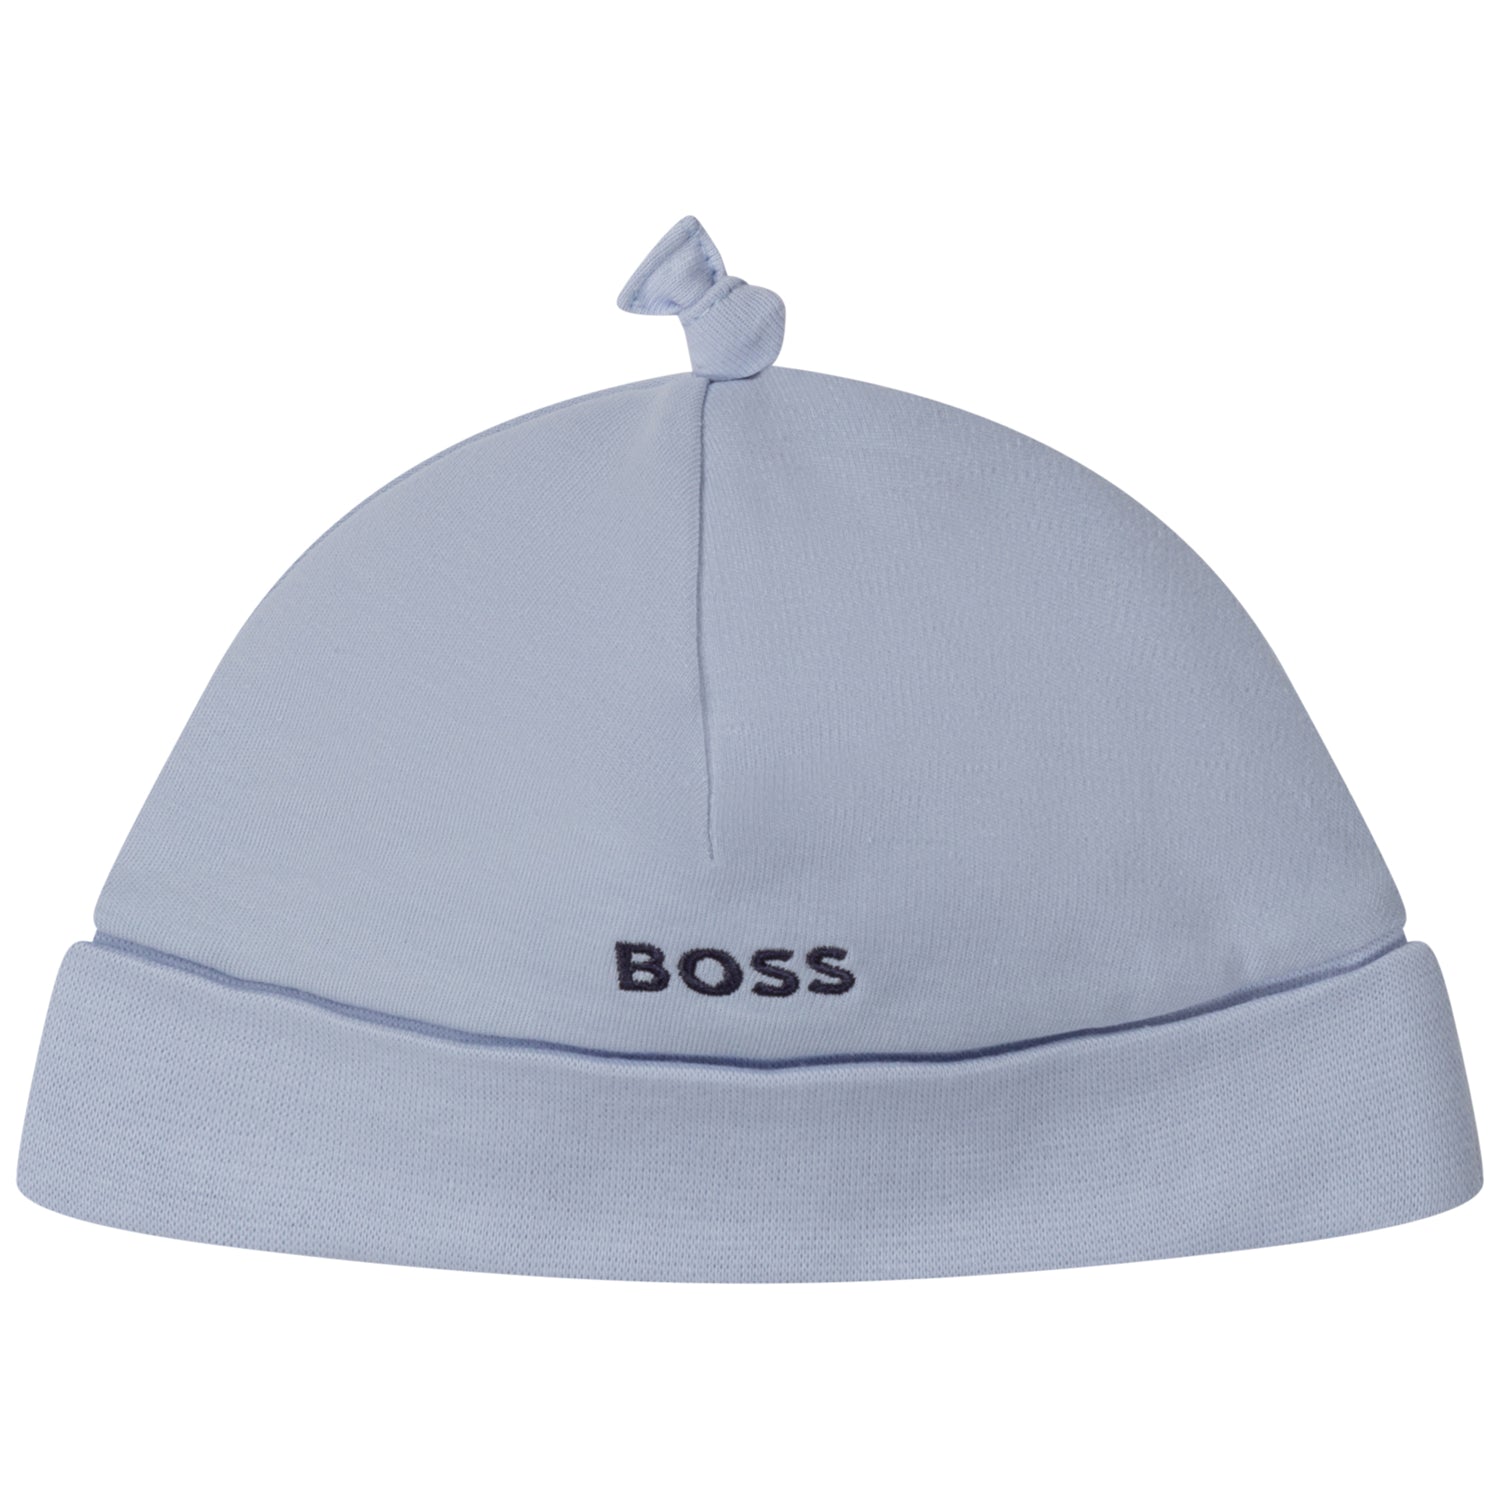 Boss Pull On Hat Style: J91127